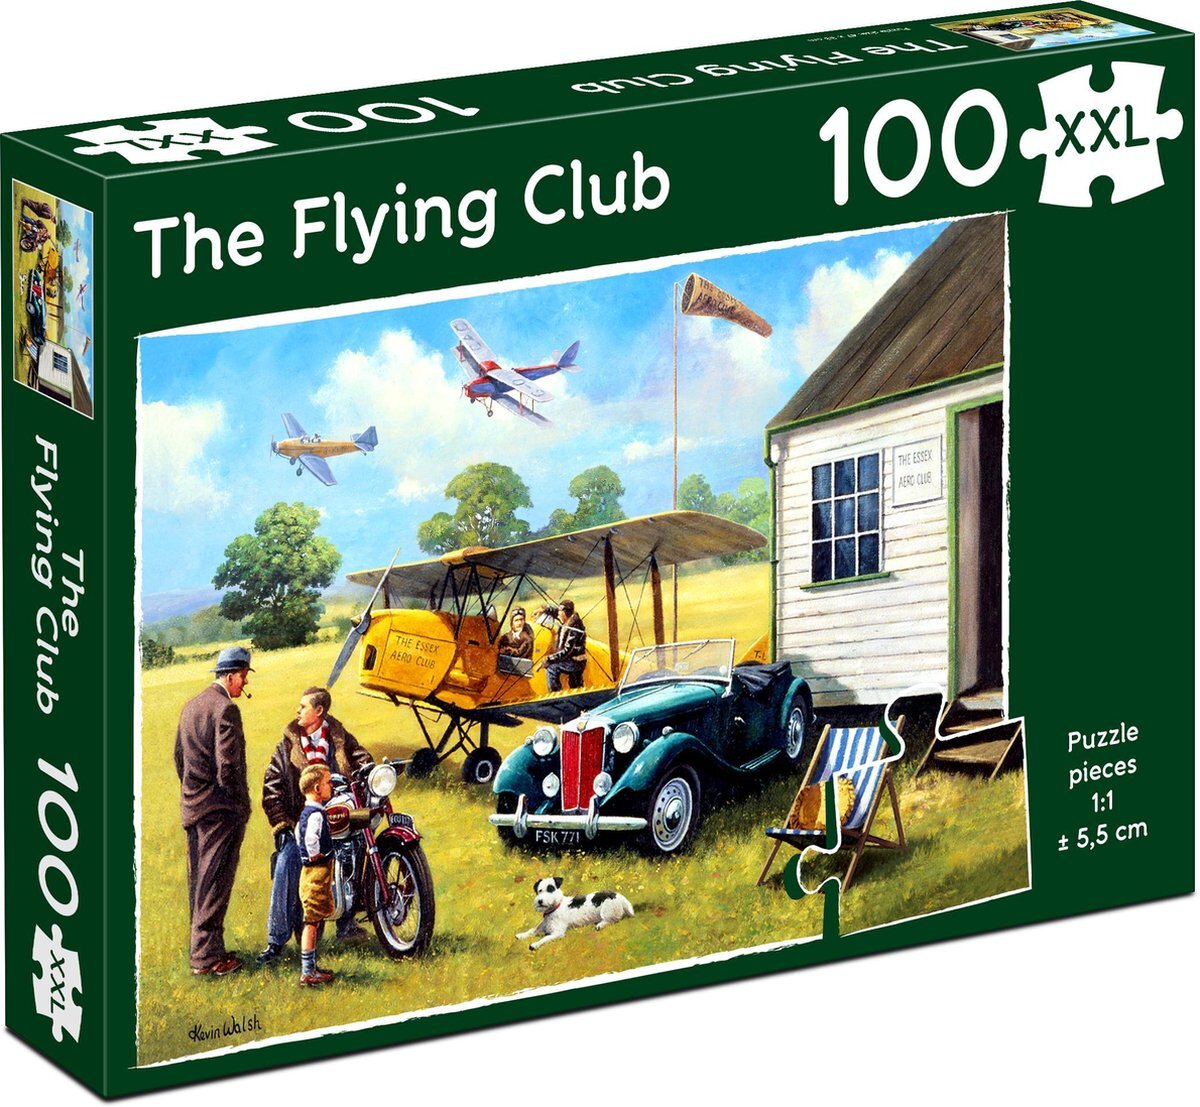 Tucker's Fun Factory XXL Puzzel - The Flying Club (100 XXL)